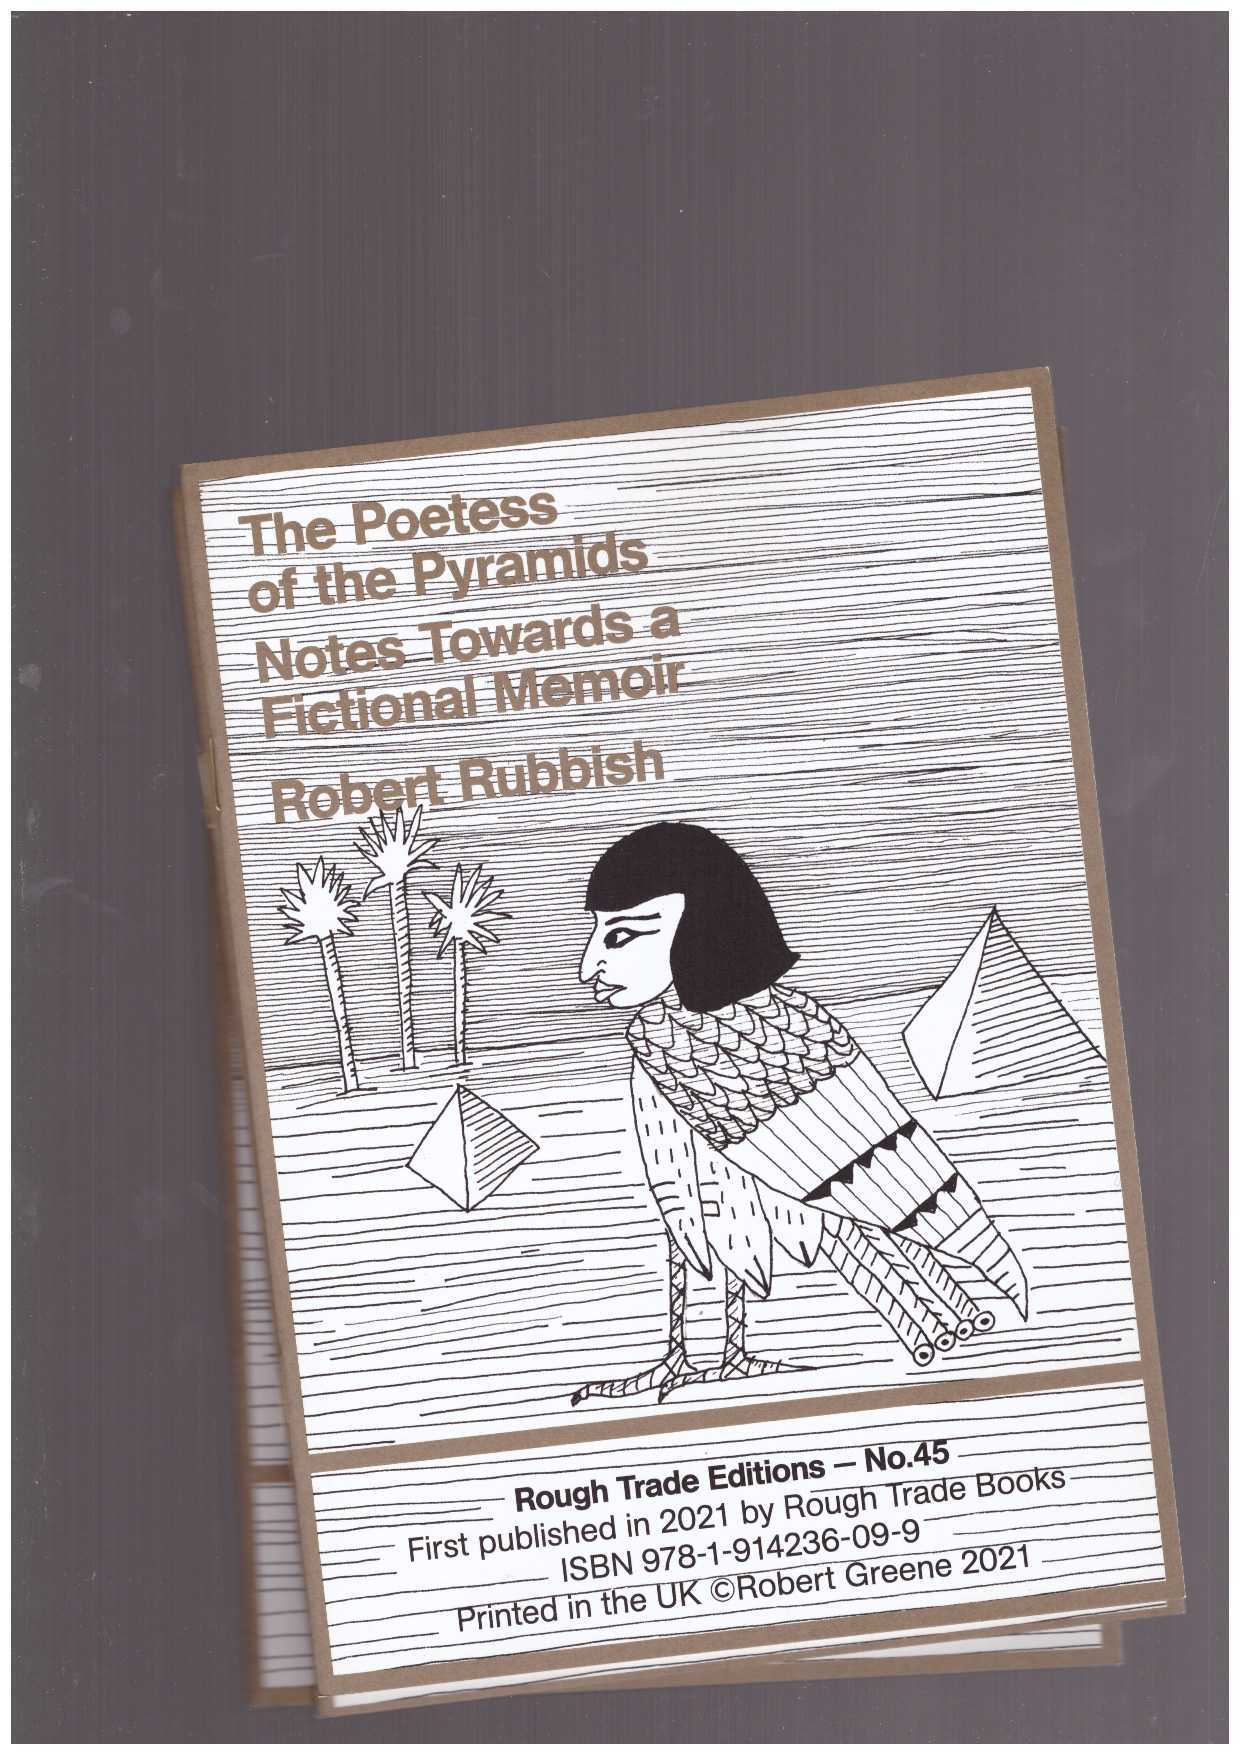 RUBBISH, Robert  - The Poetess of the Pyramids. Notes Towards a Fictional Memoir